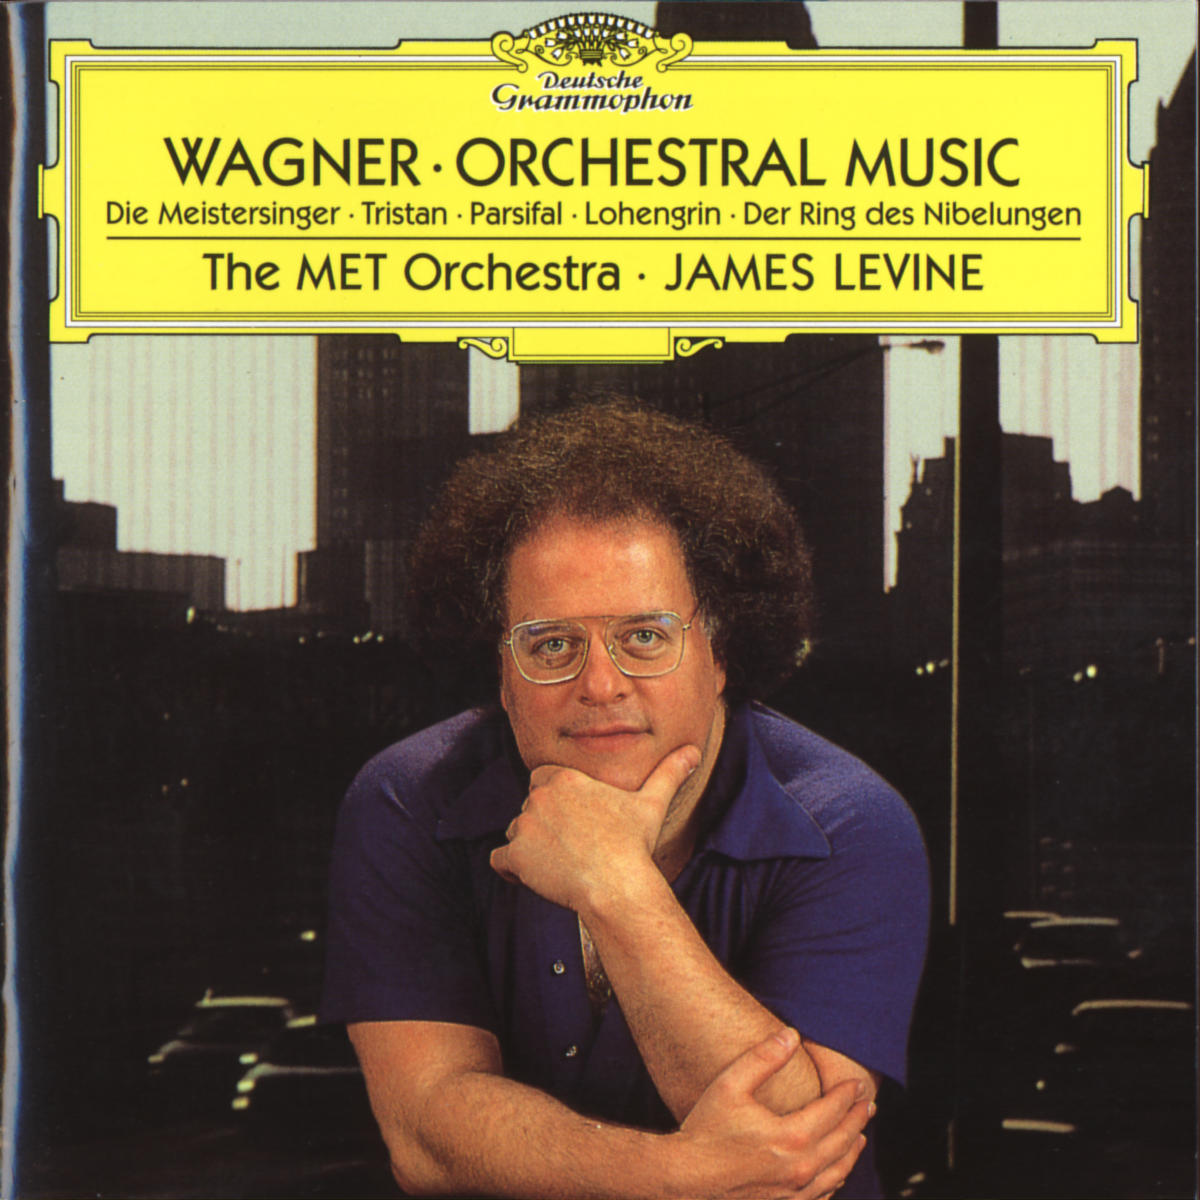 Metropolitan orchestra. James Levine. Wagner Orchestra. Оркестр Вагнера. Wagner Orchestra ждет тебя.